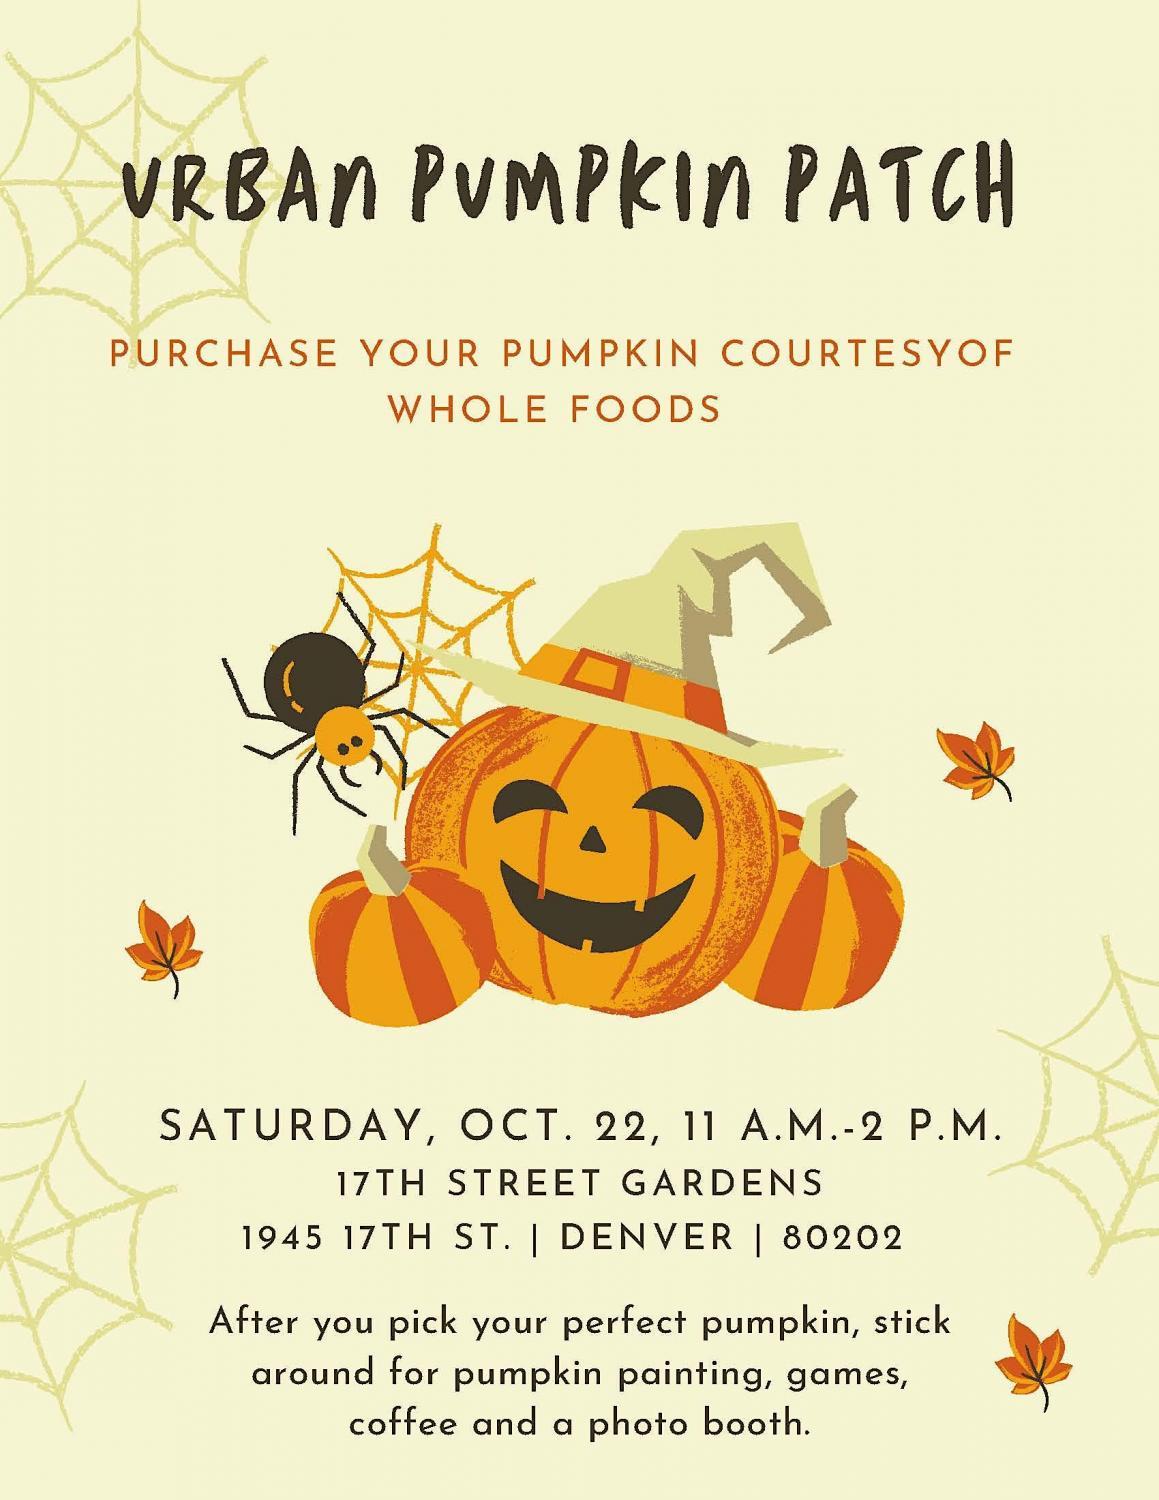 Urban Pumpkin Patch
Sat Oct 22, 11:00 AM - Sat Oct 22, 2:00 PM
in 2 days